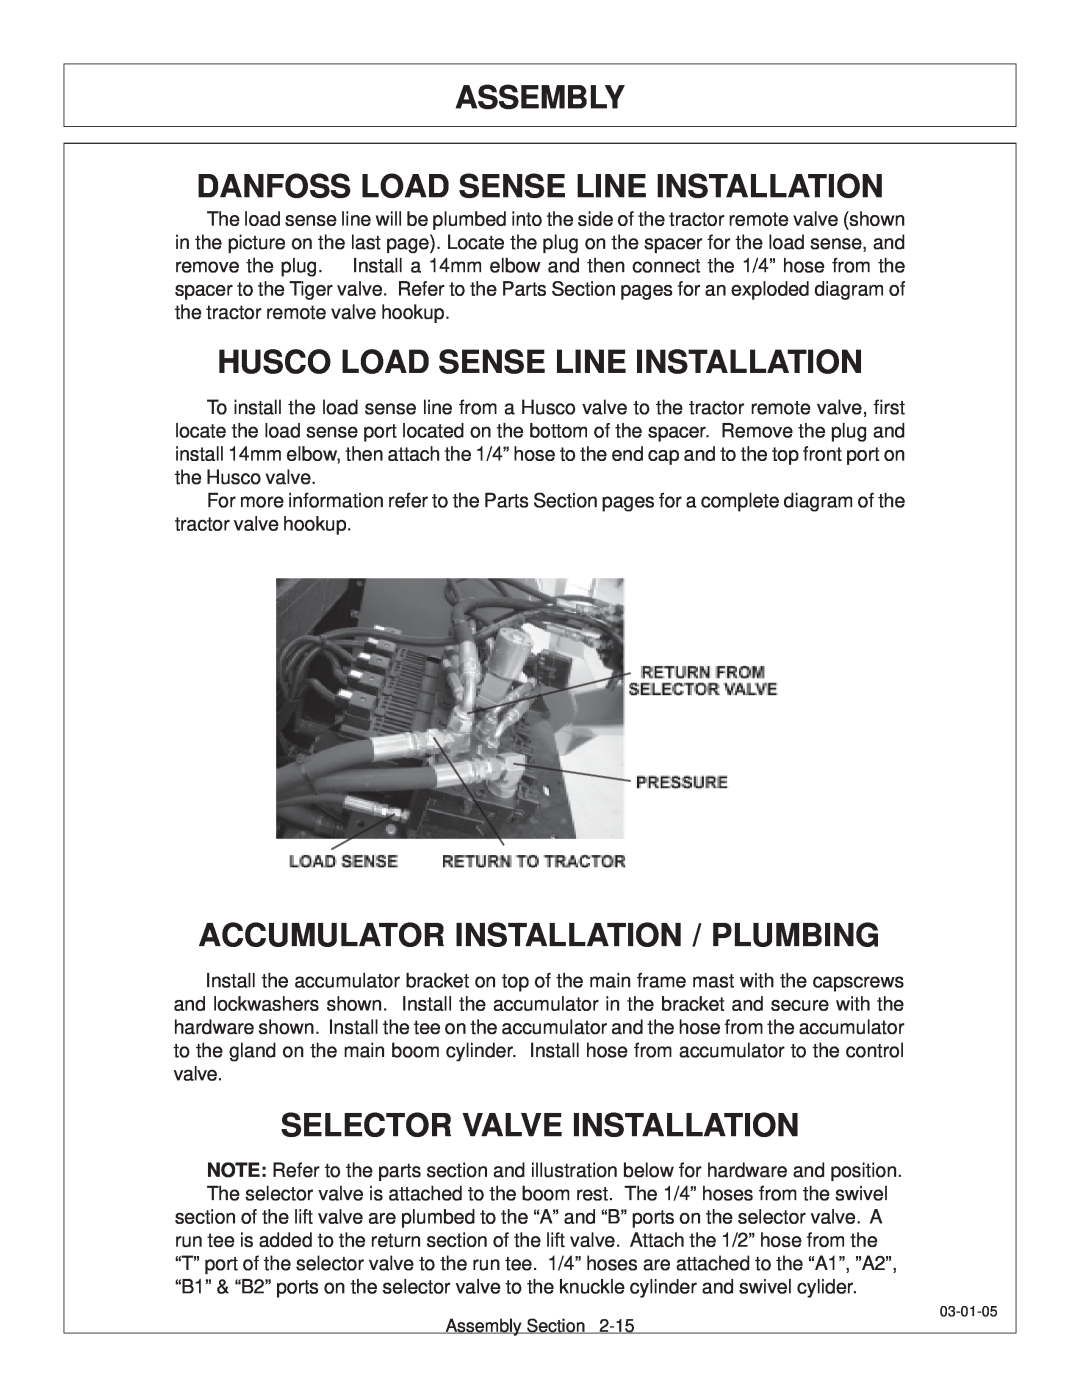 Tiger JD 62-6420 manual Assembly Danfoss Load Sense Line Installation, Husco Load Sense Line Installation 